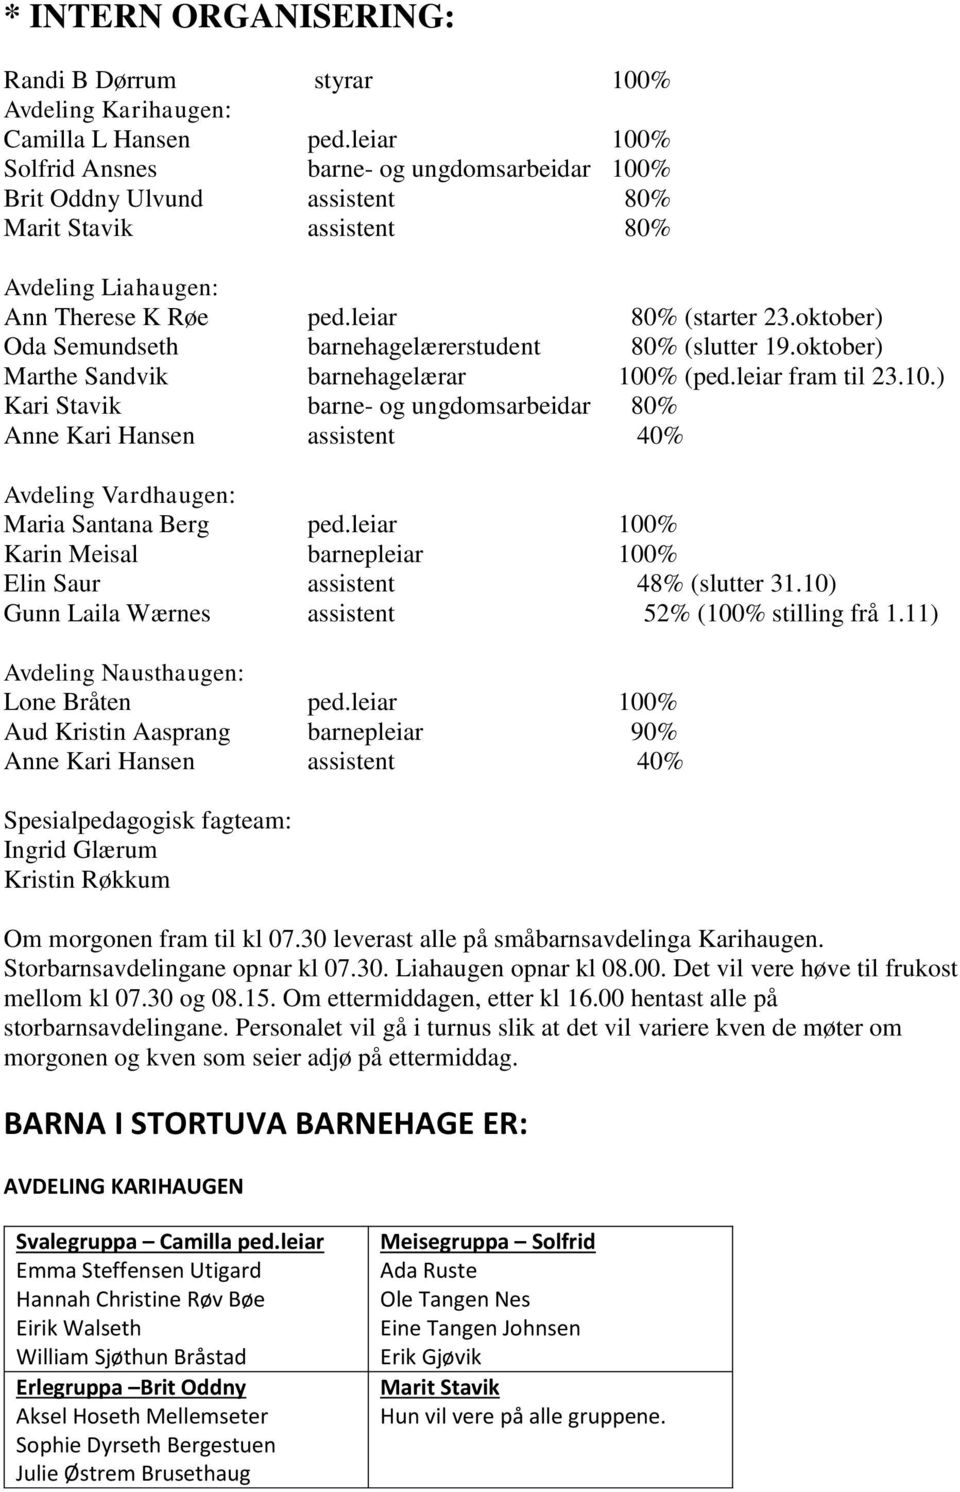 oktober) Oda Semundseth barnehagelærerstudent 80% (slutter 19.oktober) Marthe Sandvik barnehagelærar 100